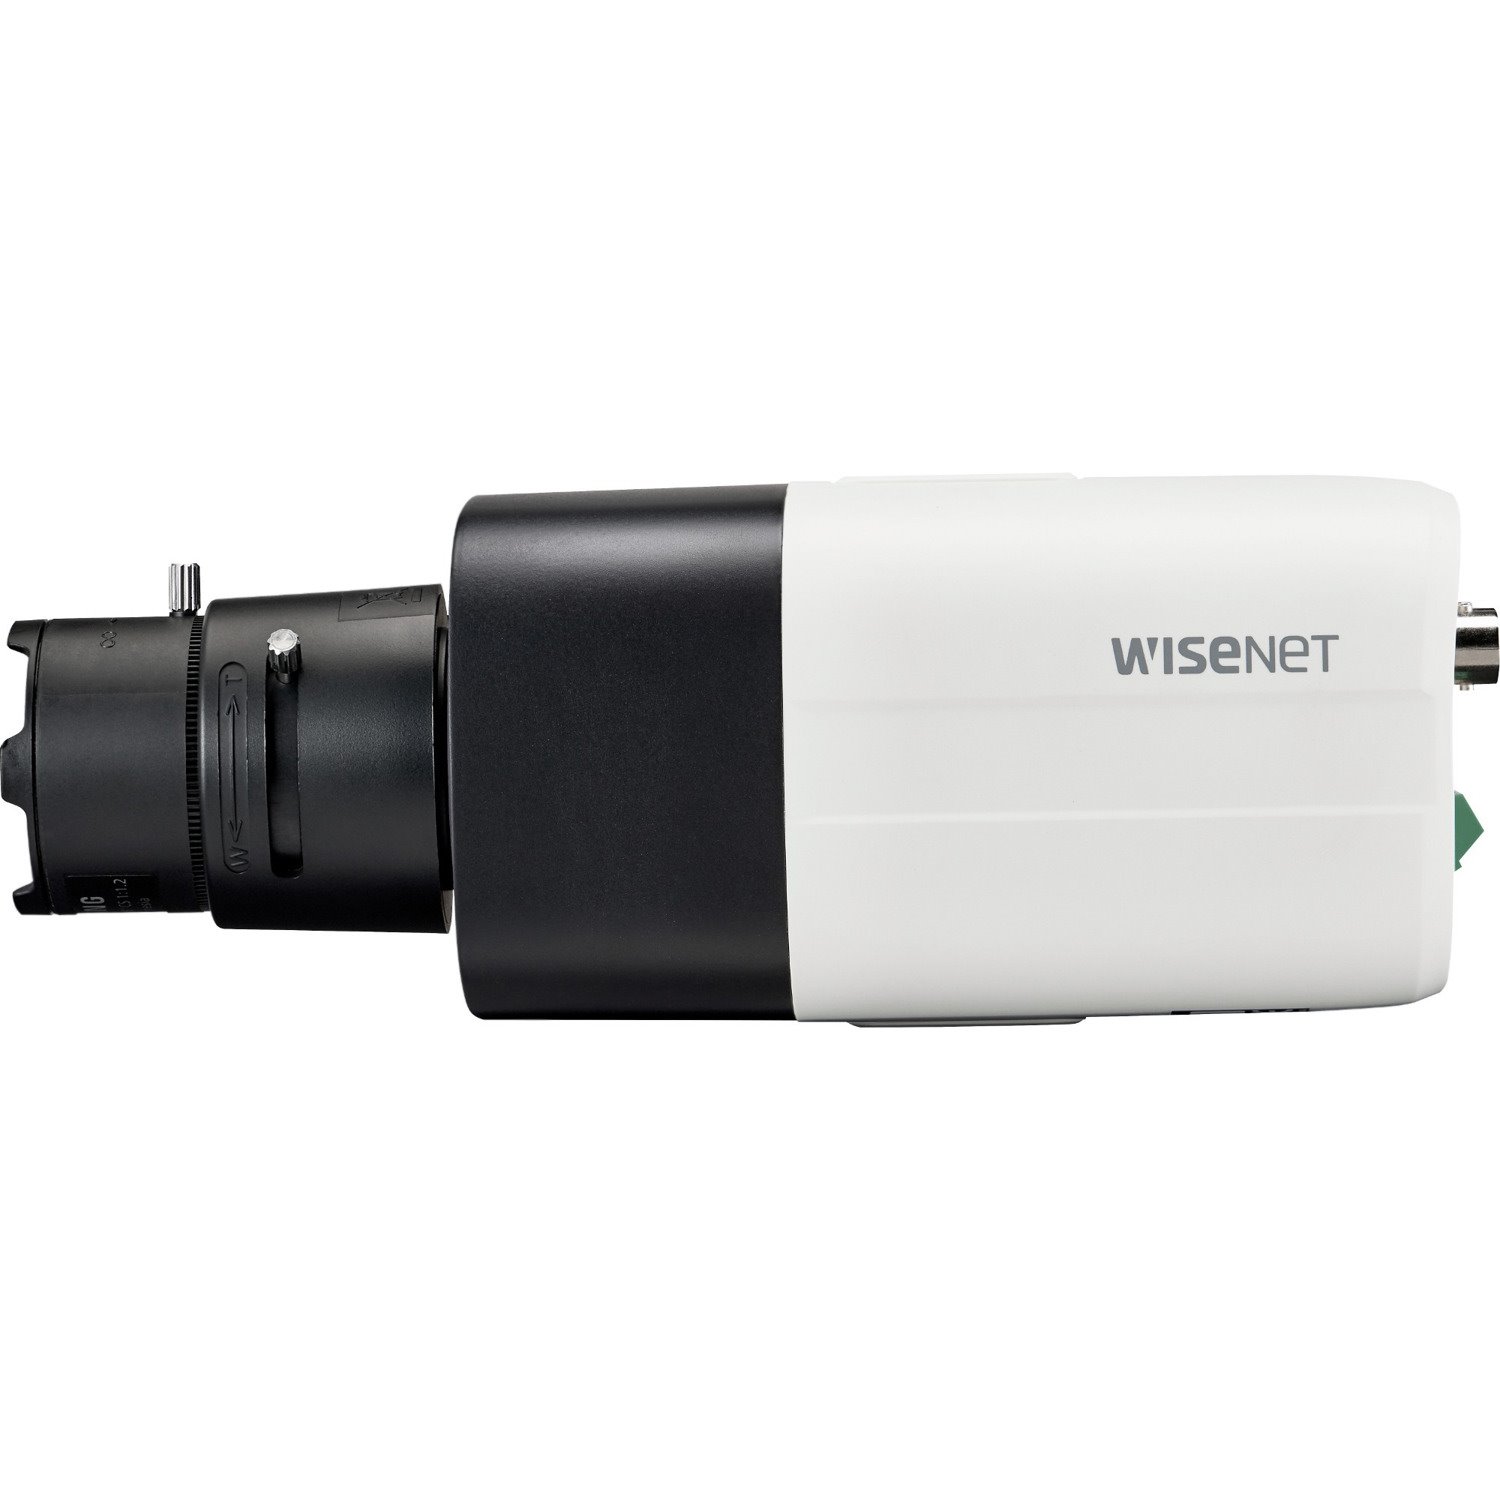 Wisenet SCB-6005 2 Megapixel Indoor/Outdoor Full HD Surveillance Camera - Color - Box - Black, Ivory